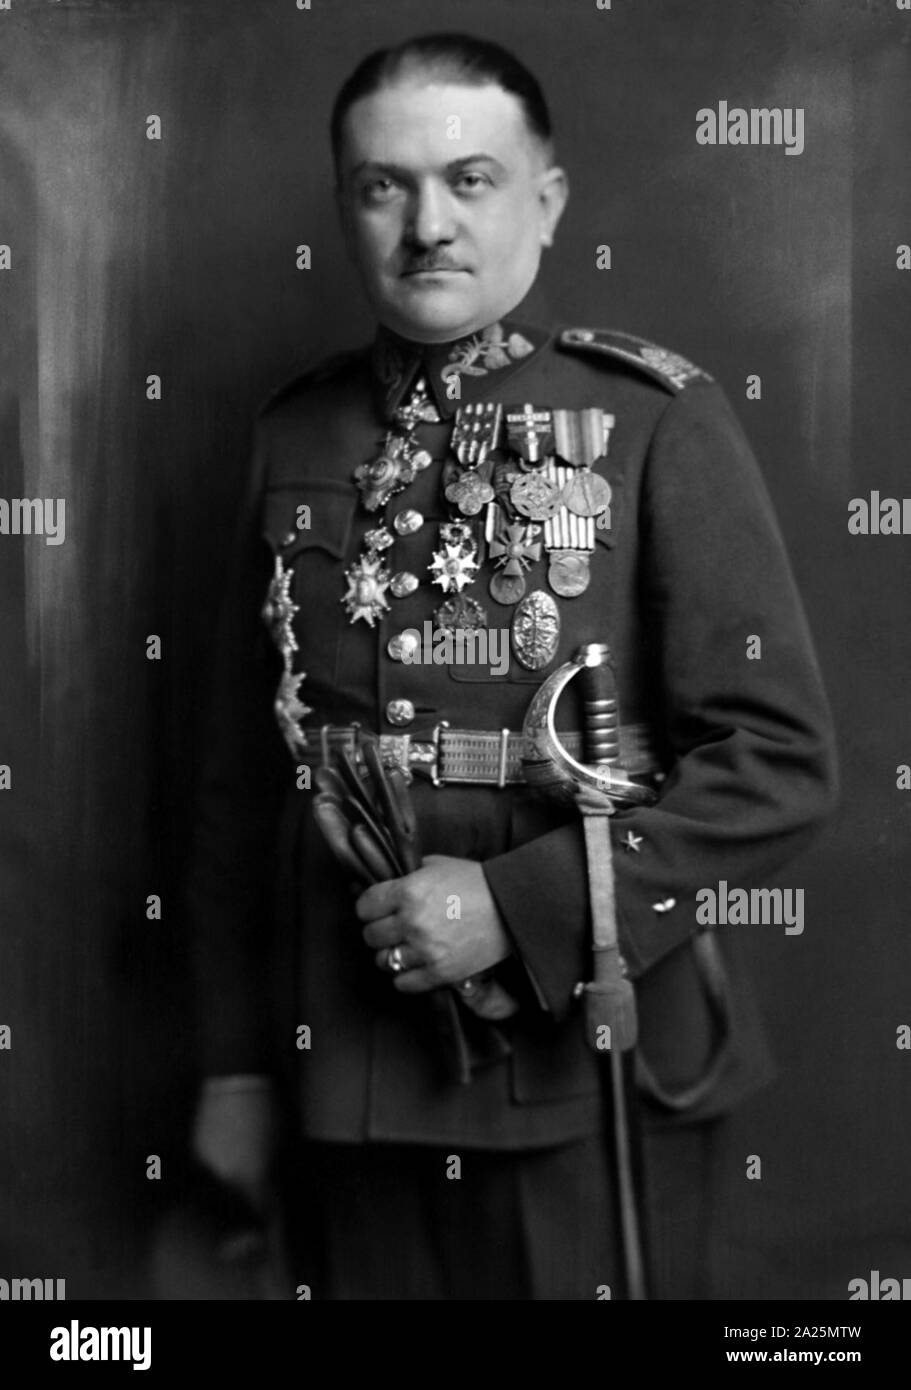 Photographic portrait of Alois Elias. Alois Elias (1890-1942) a Czech General, former Prime Minister and politician. Stock Photo